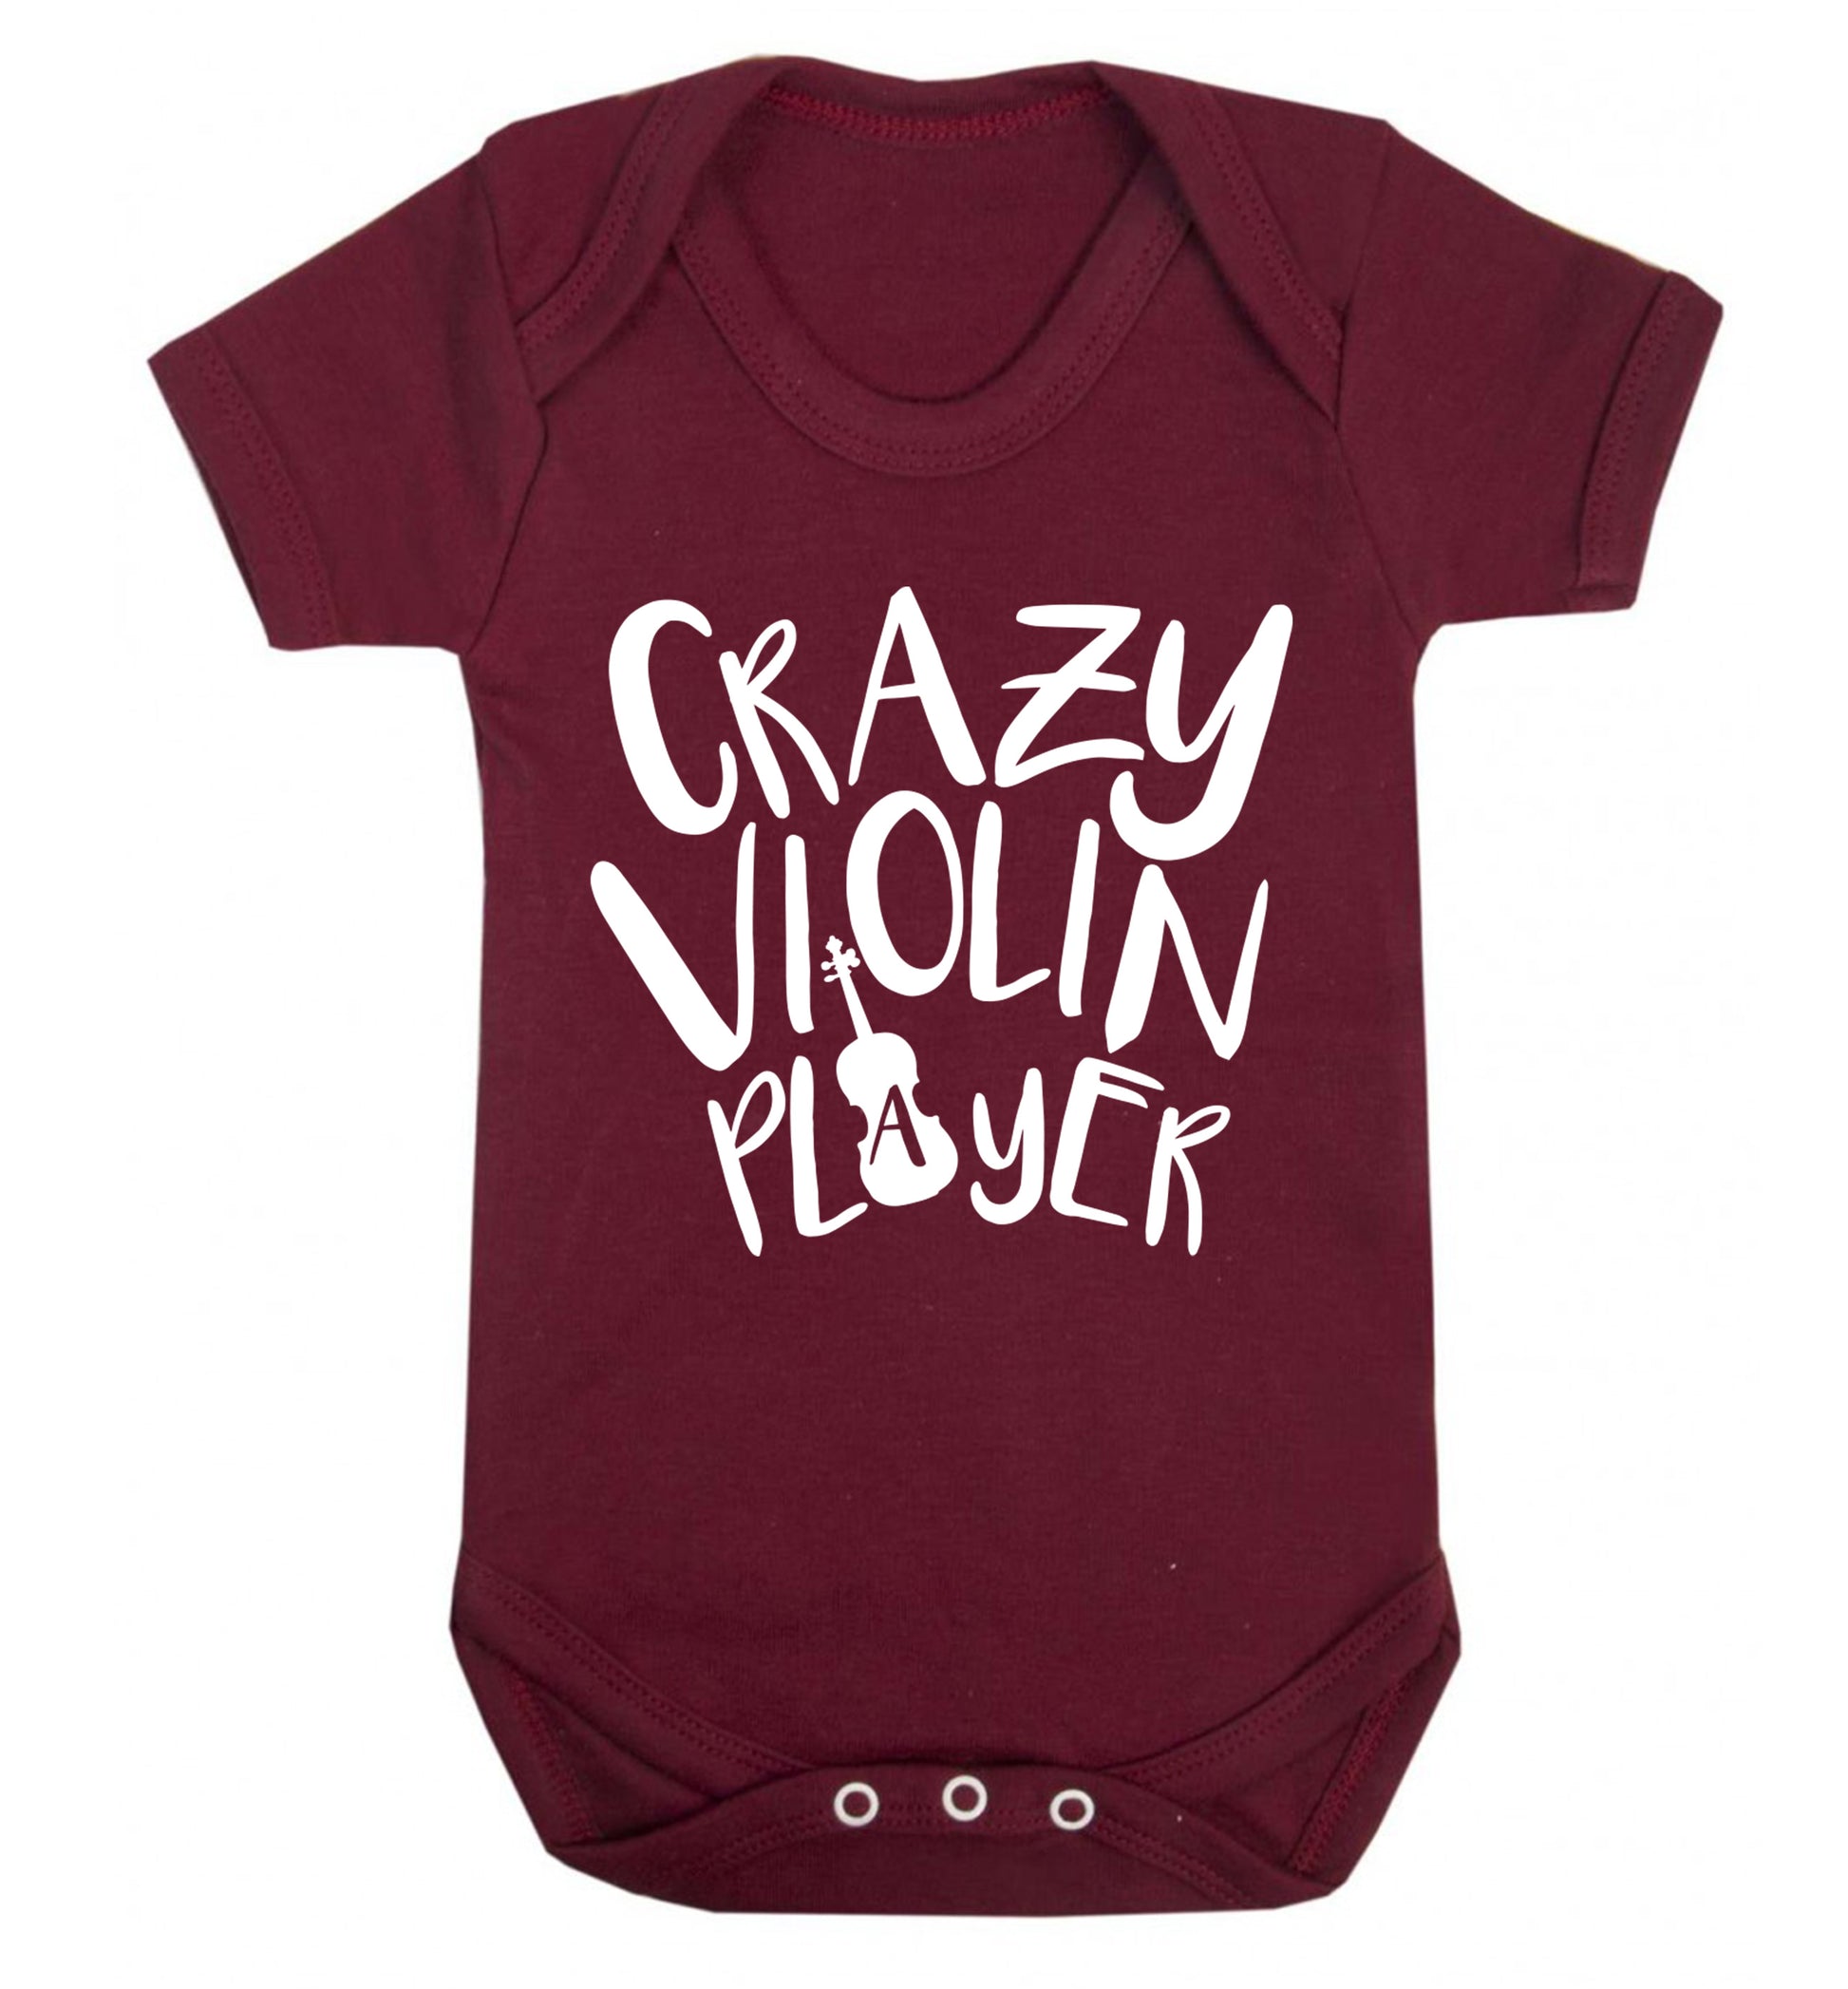 Crazy Violin Player Baby Vest maroon 18-24 months